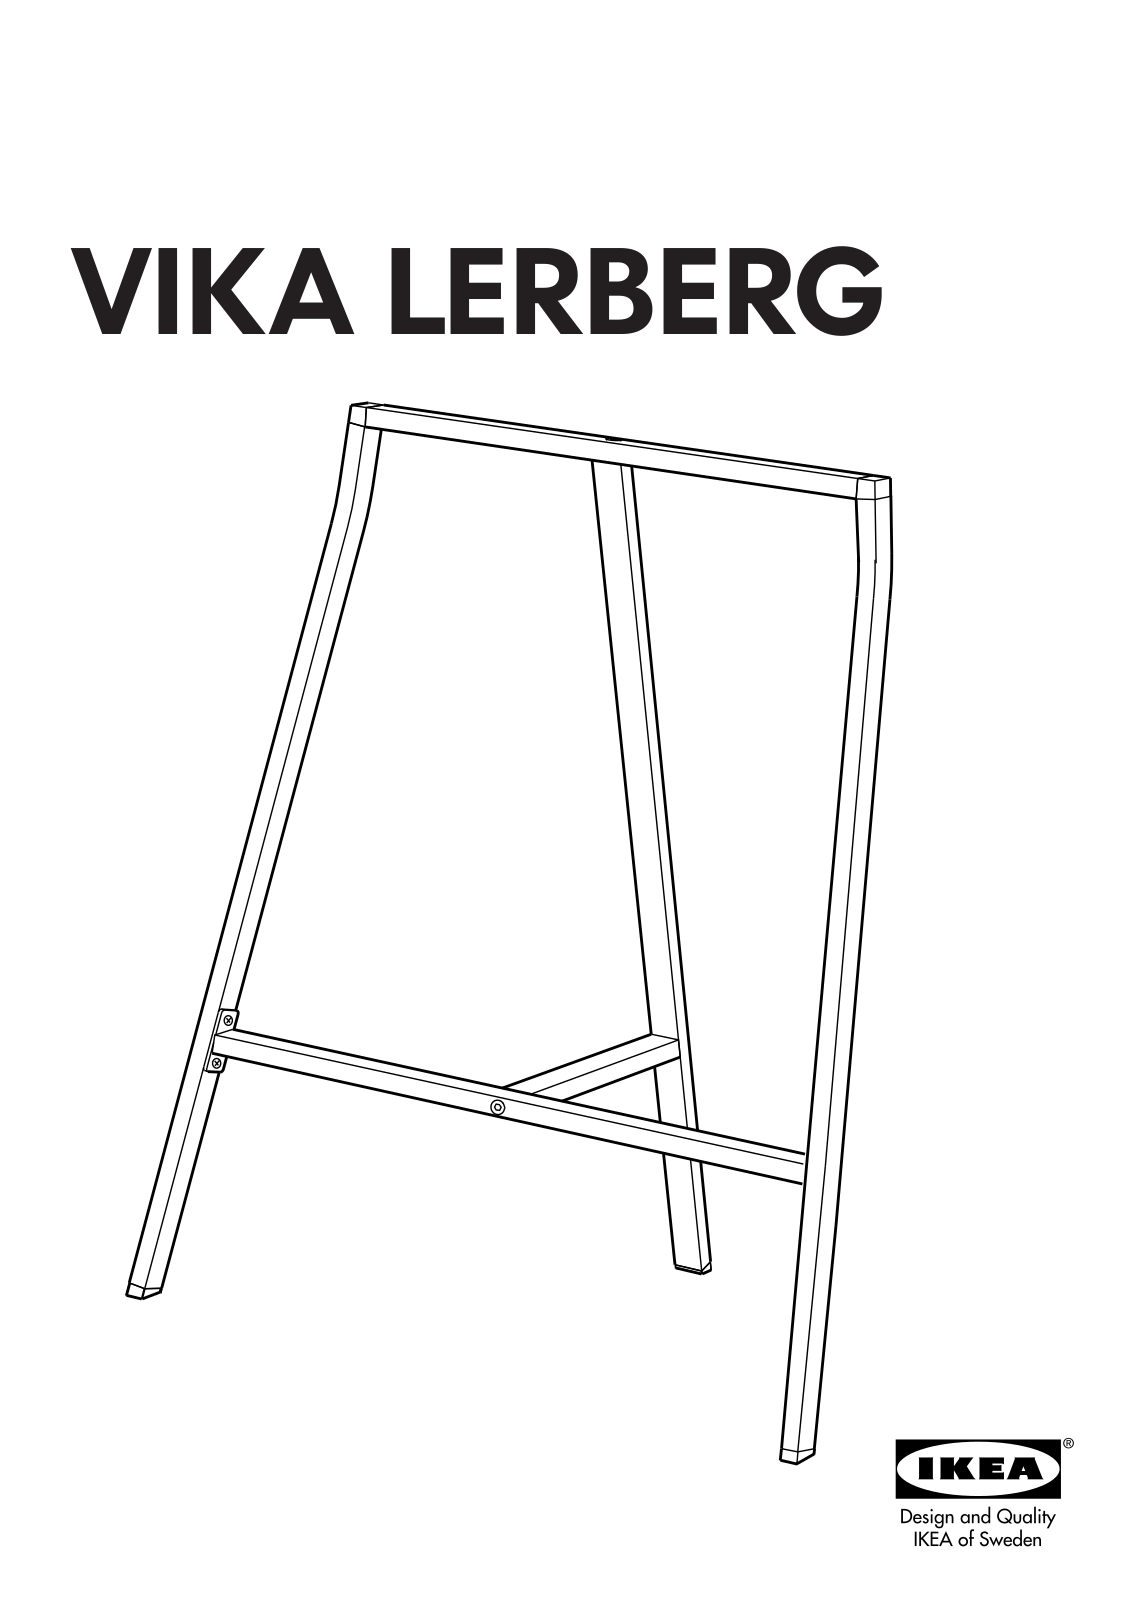 IKEA VIKA LERBERG TRESTLE Assembly Instruction